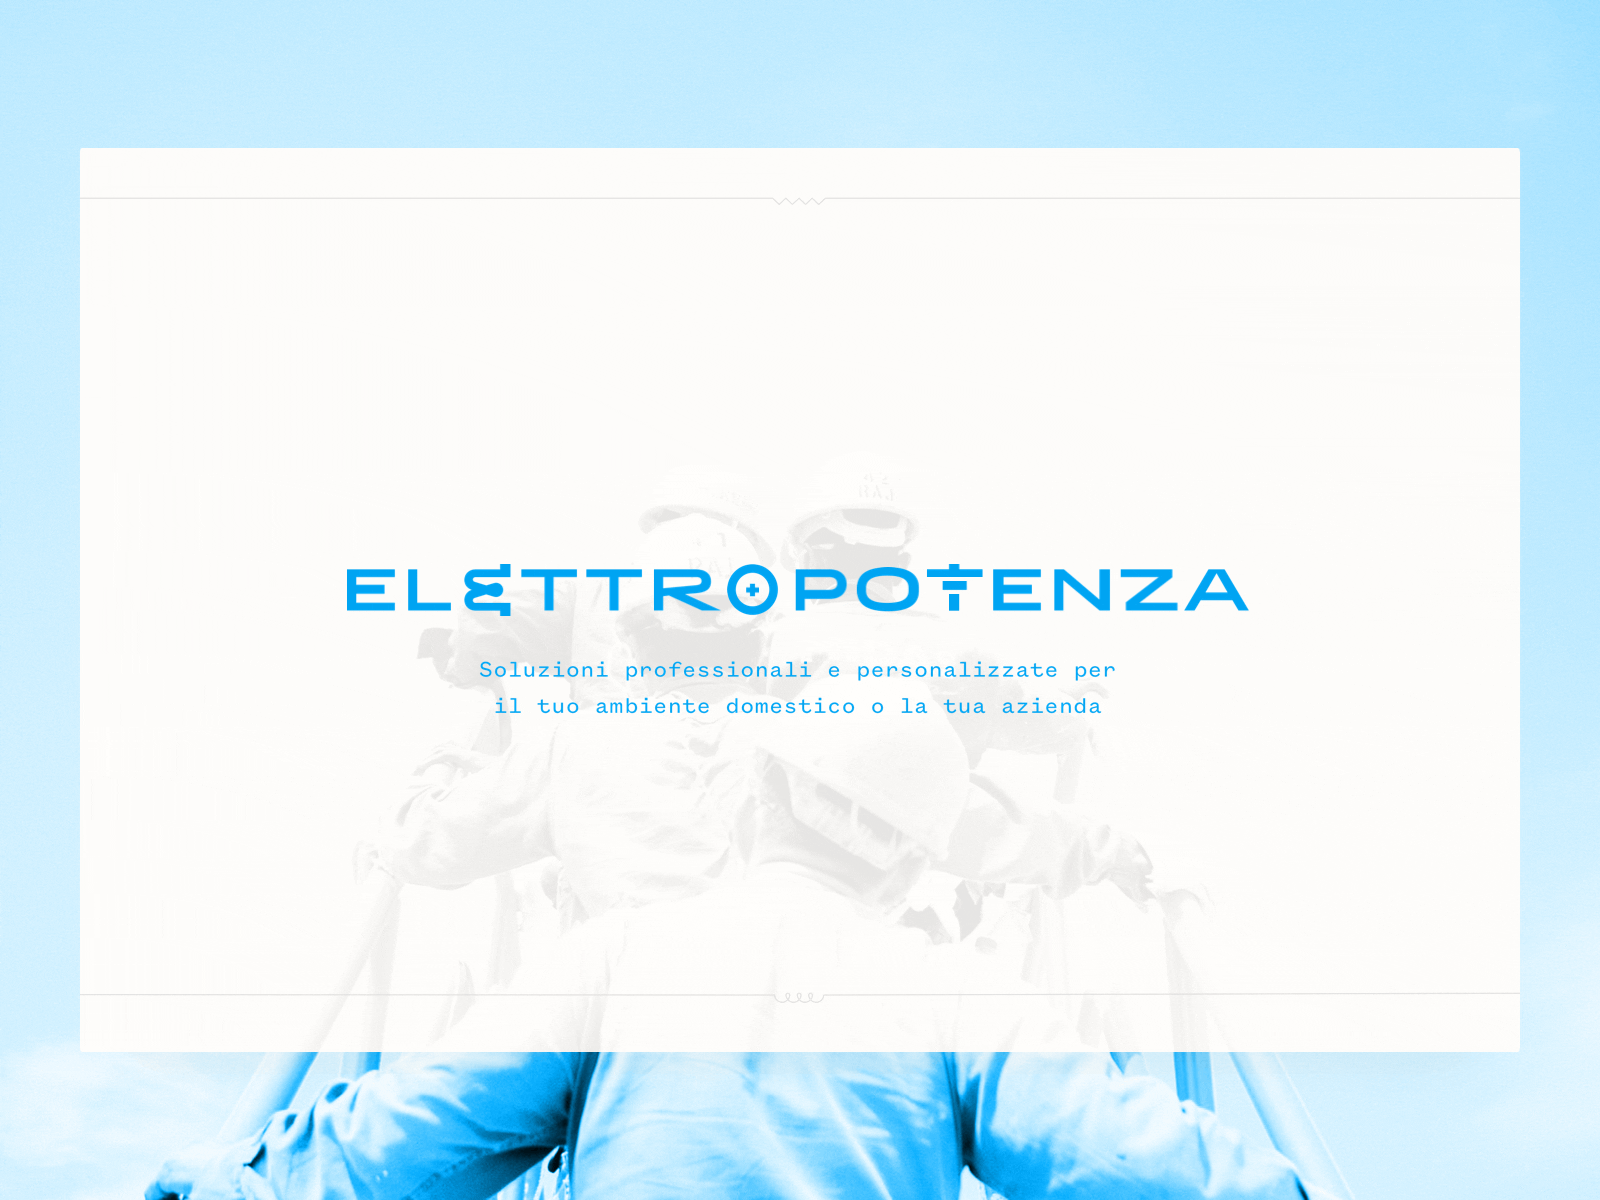 Elettropotenza website and brand